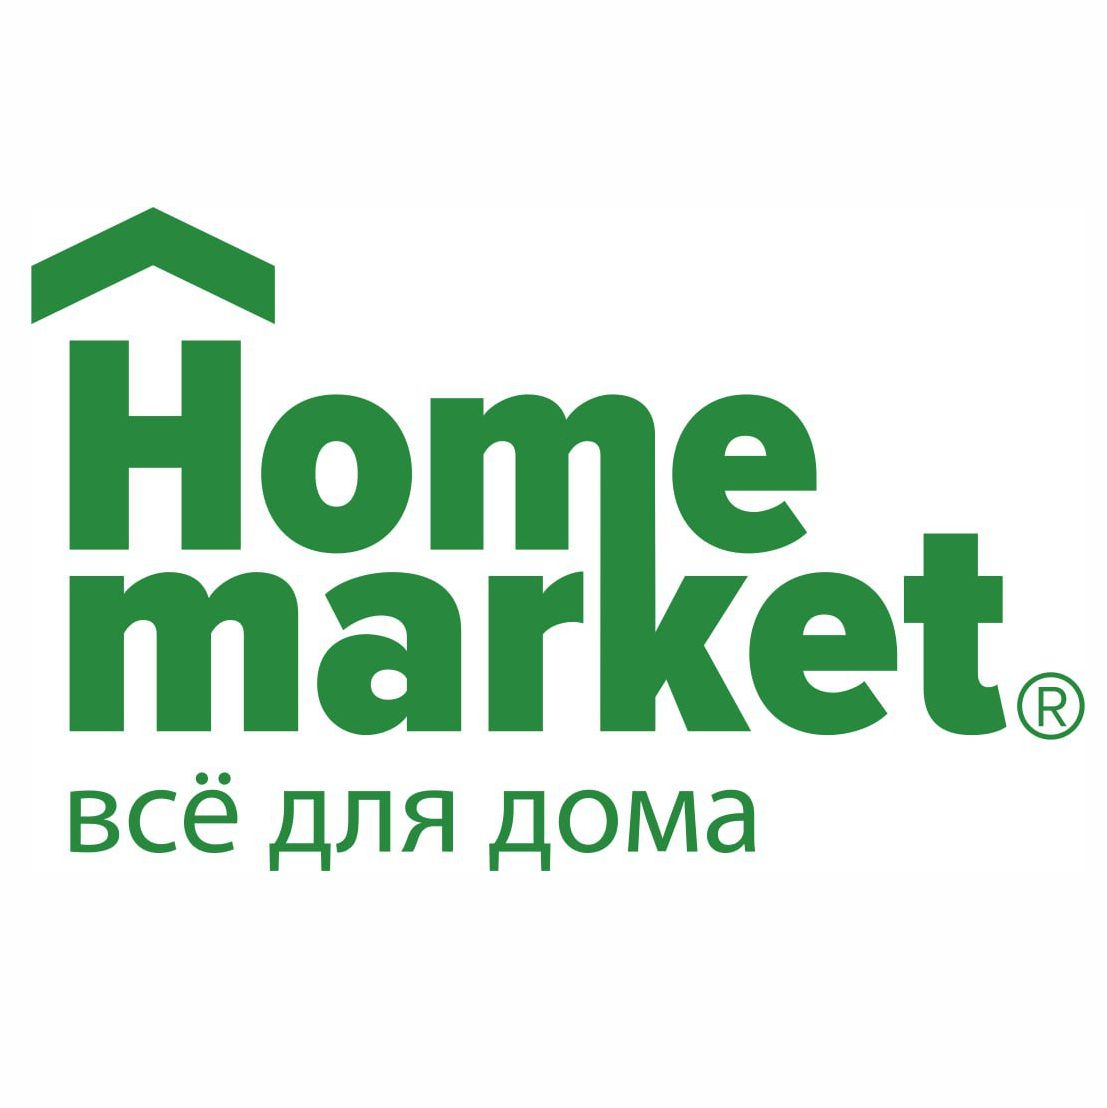 Home market sayti